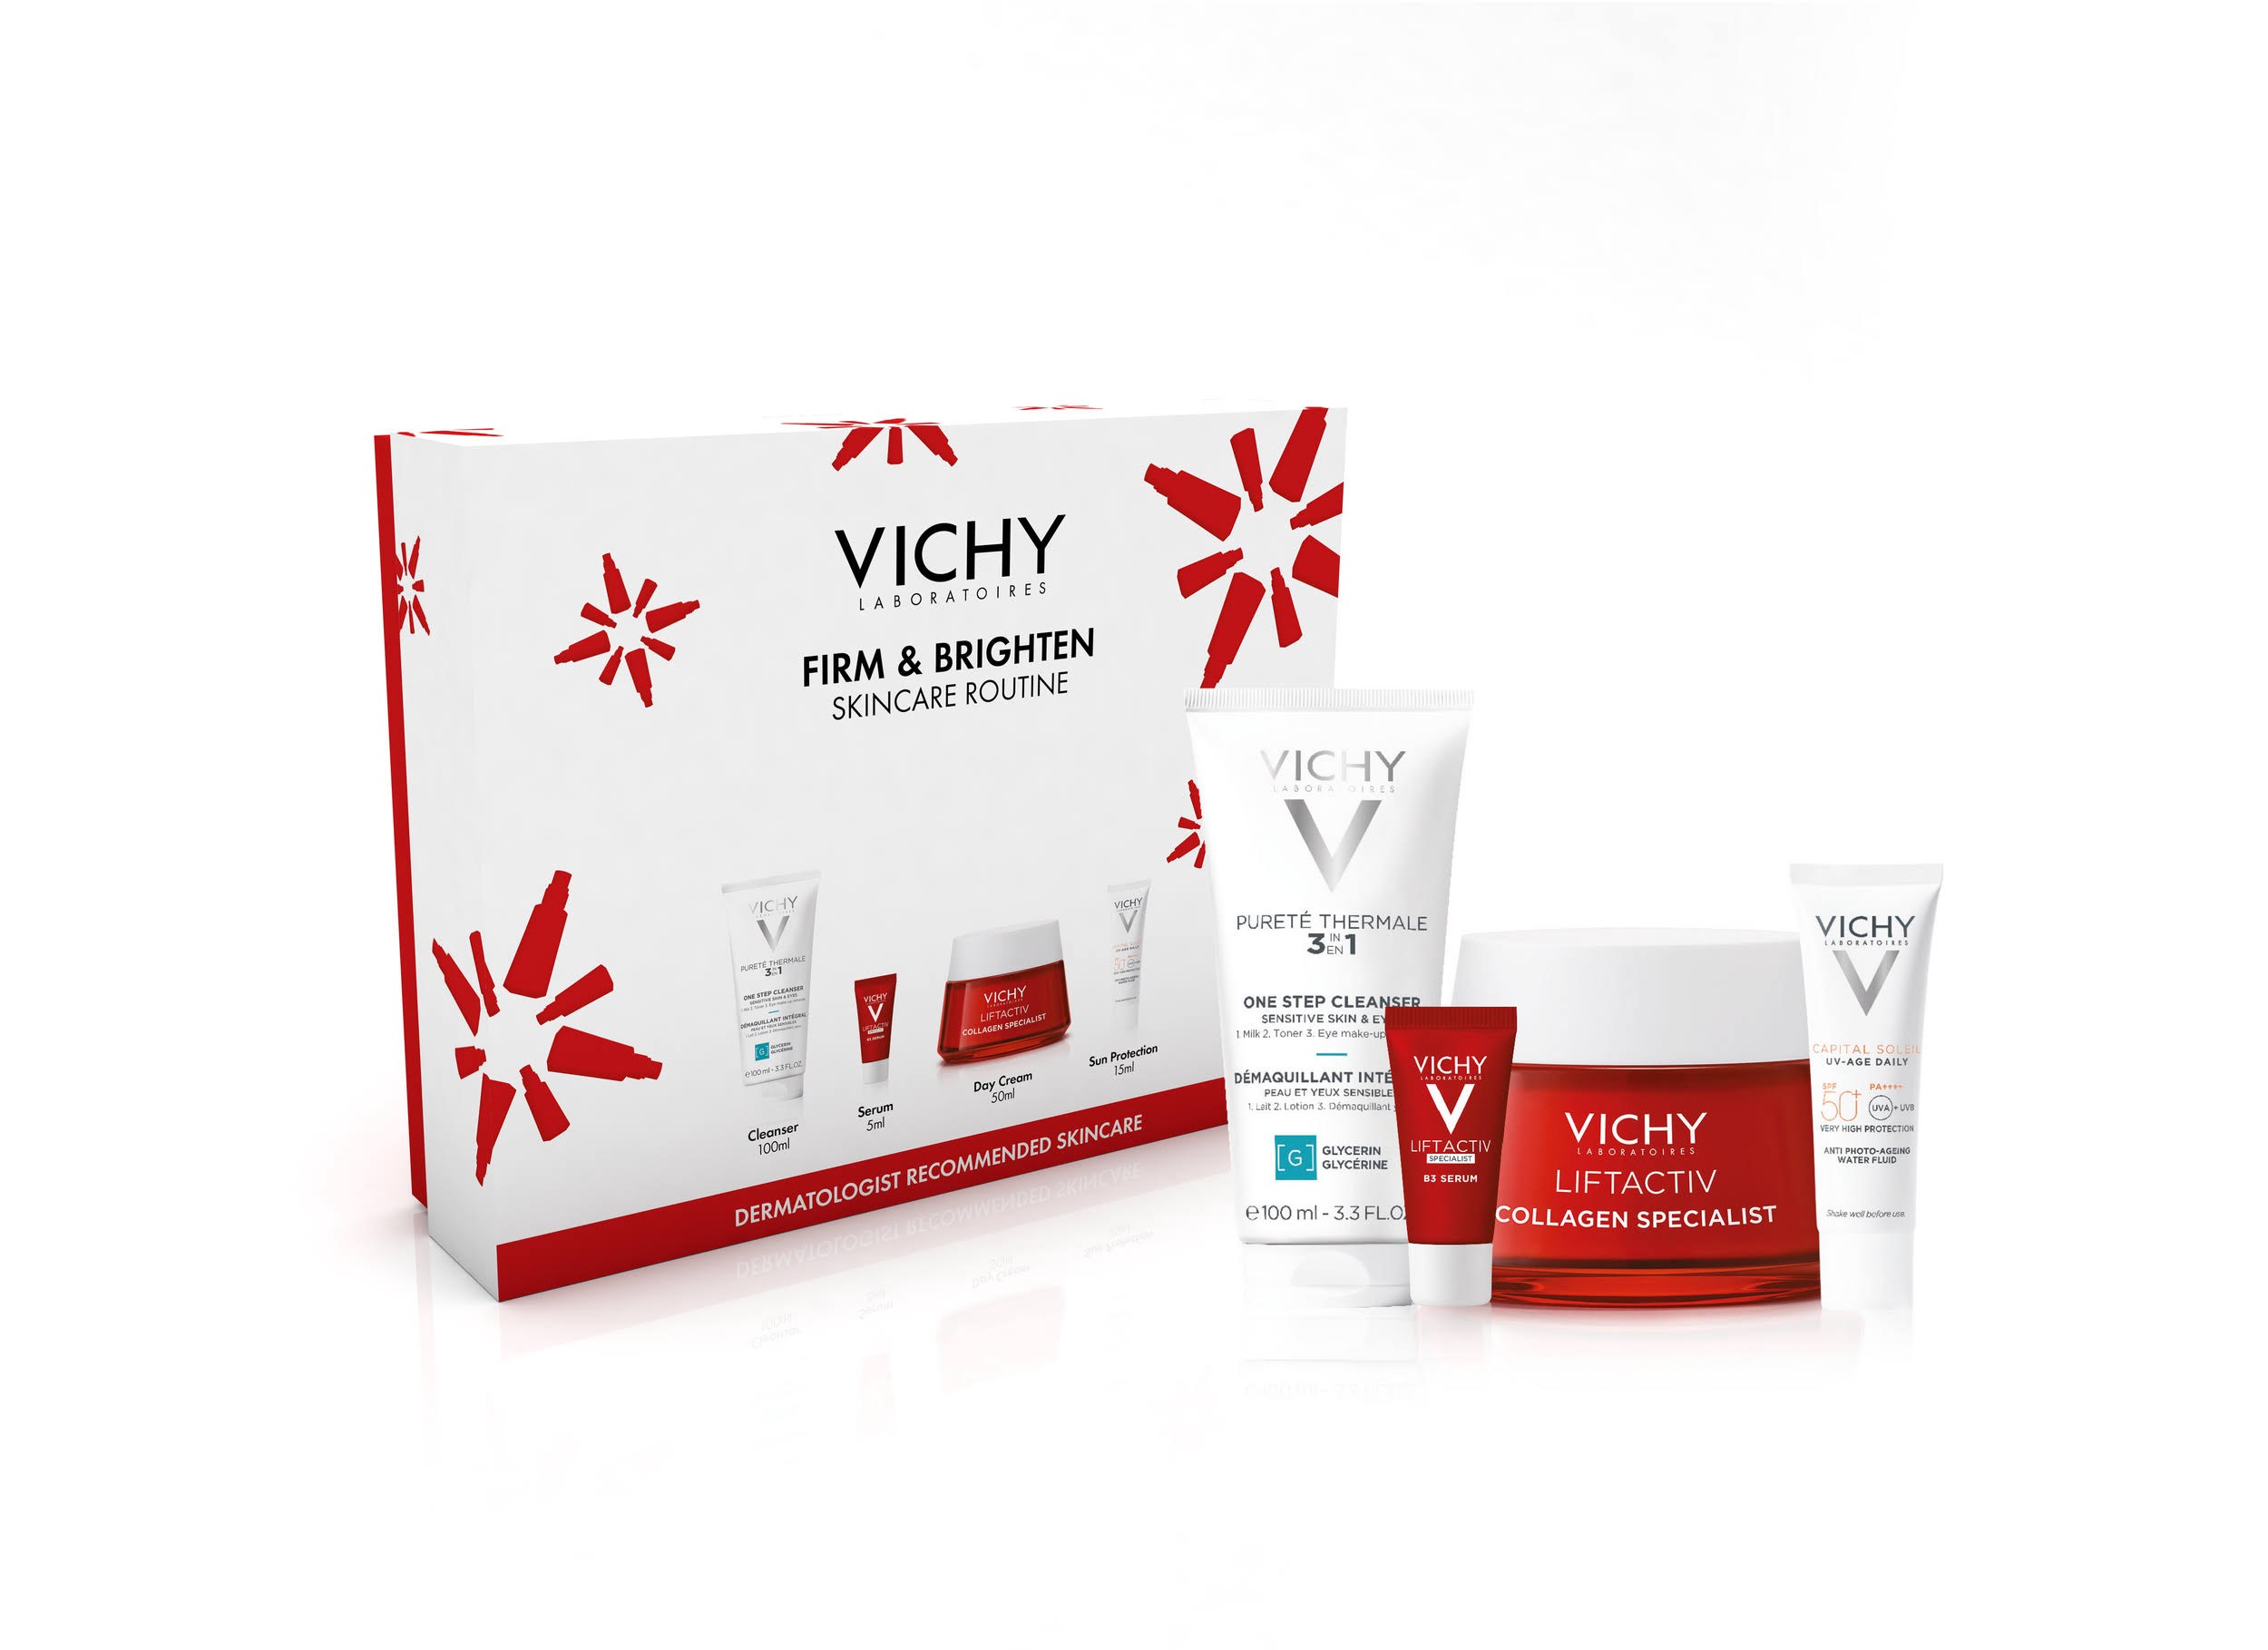 Vichy Firm & Brighten Skincare Routine Gift Set